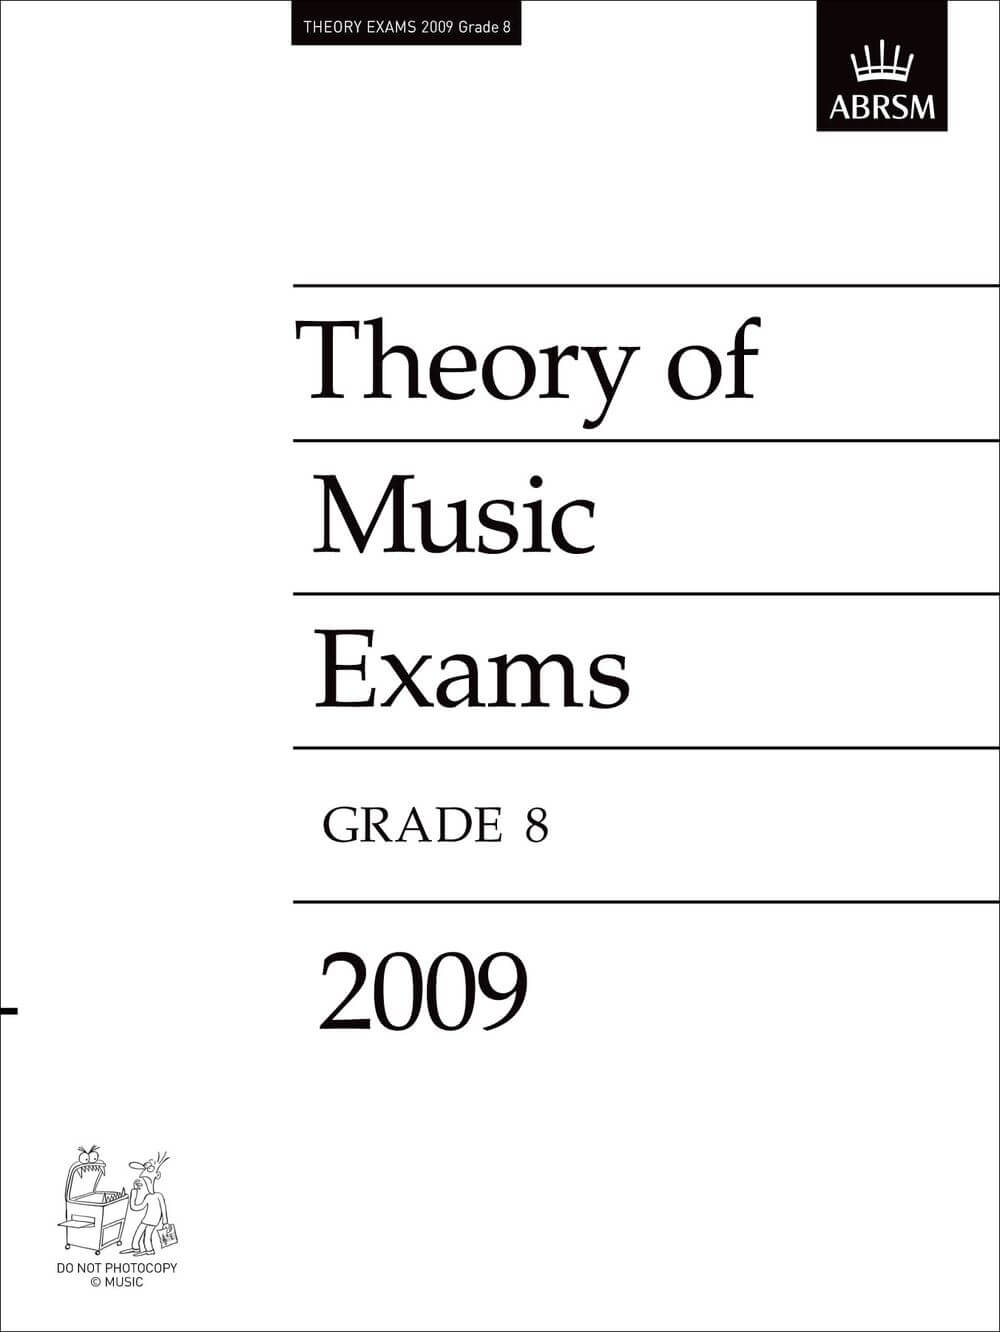 Theory of Music Exams, Grade 8, 2009